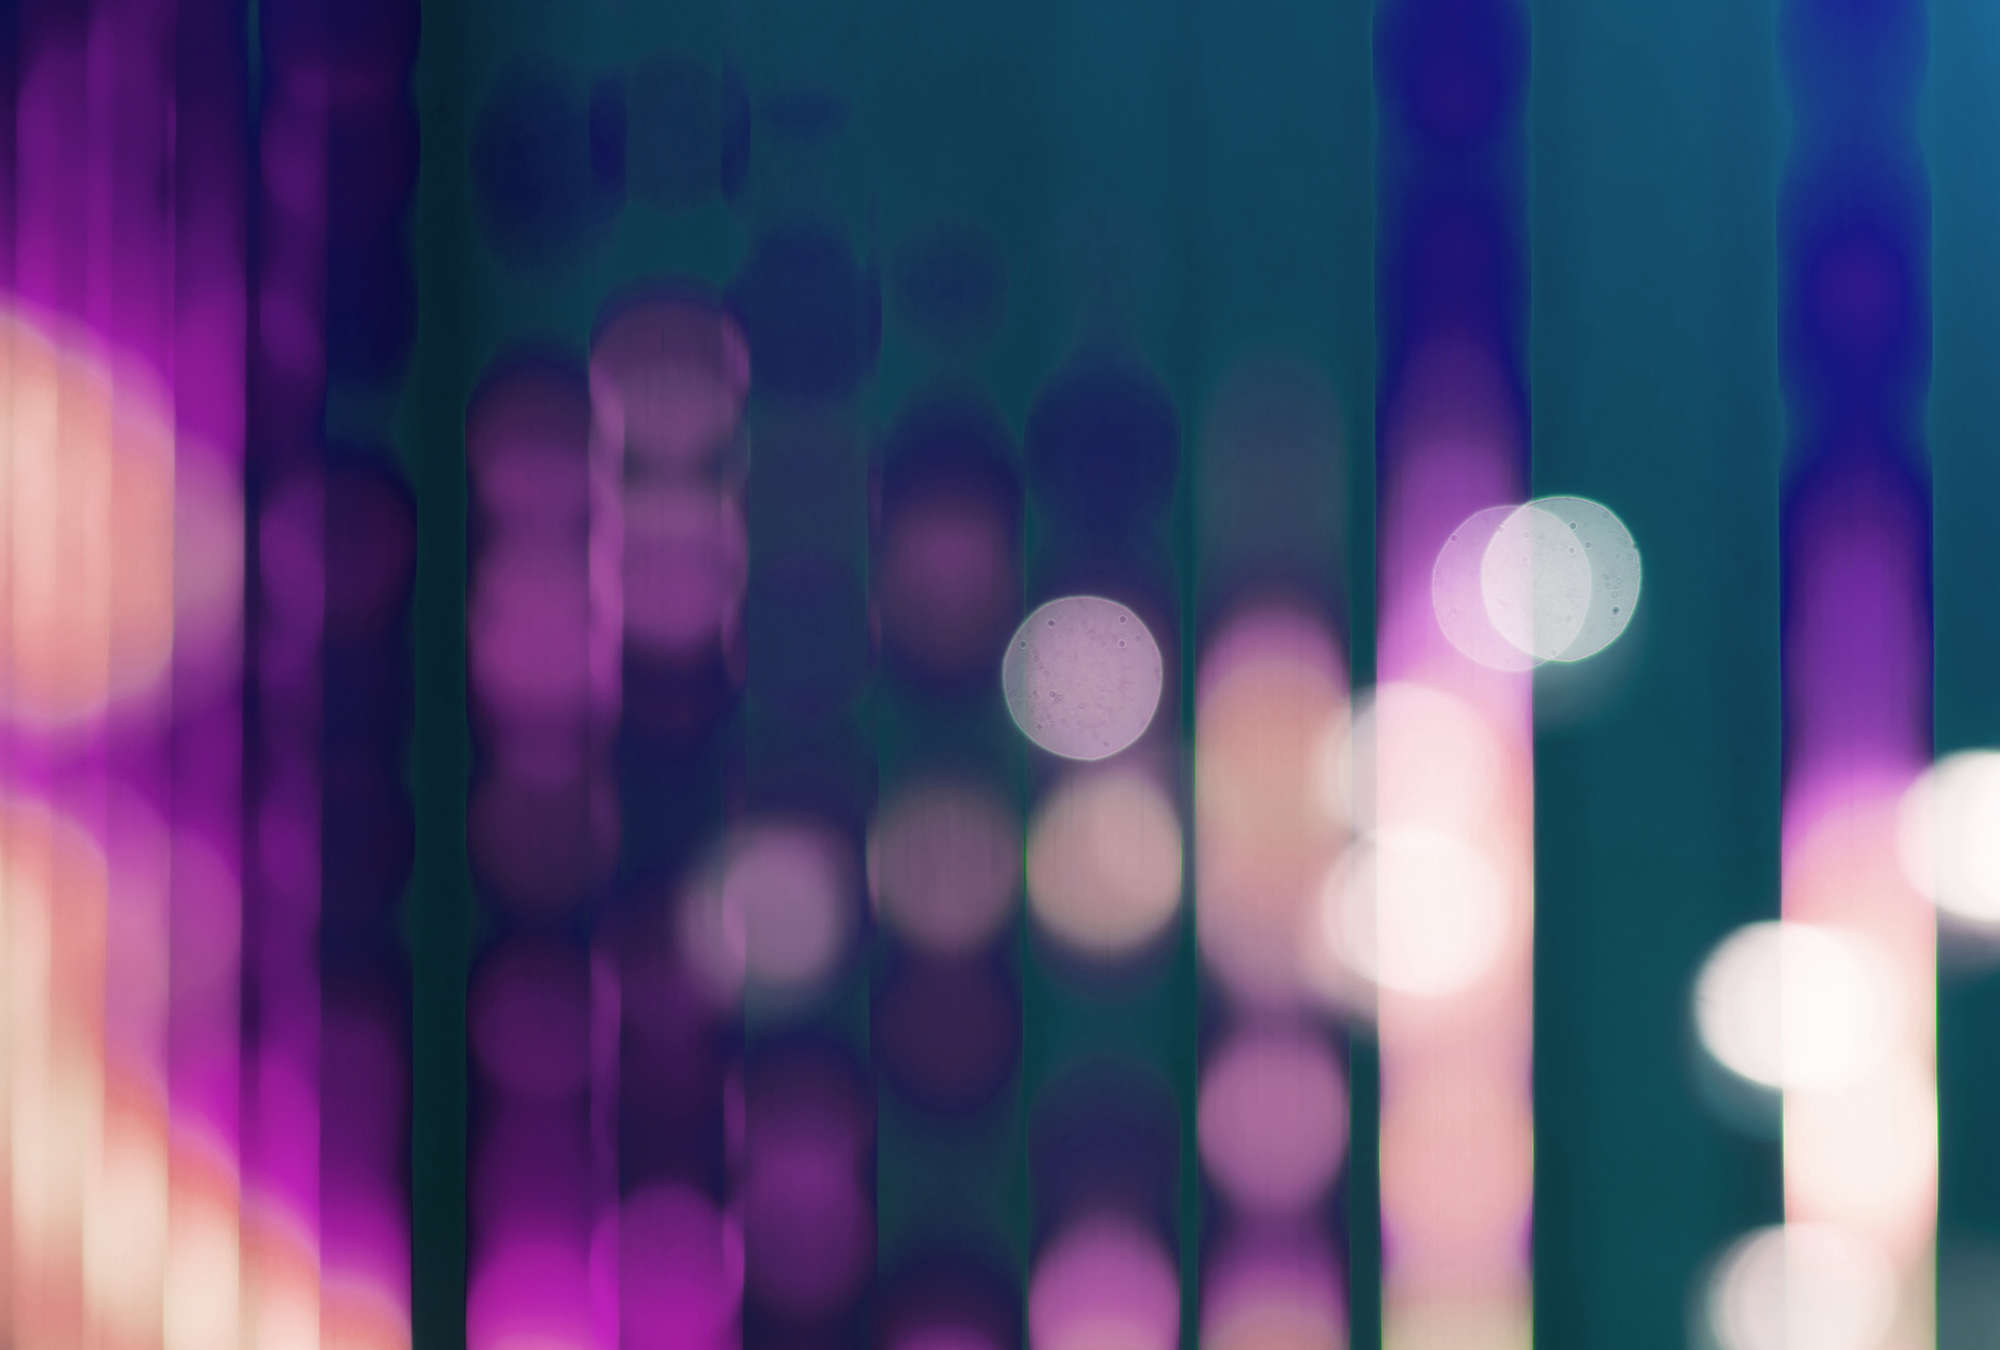             Big City Lights 3 - Fototapete mit Lichtreflexe in Violett – Blau, Violett | Perlmutt Glattvlies
        